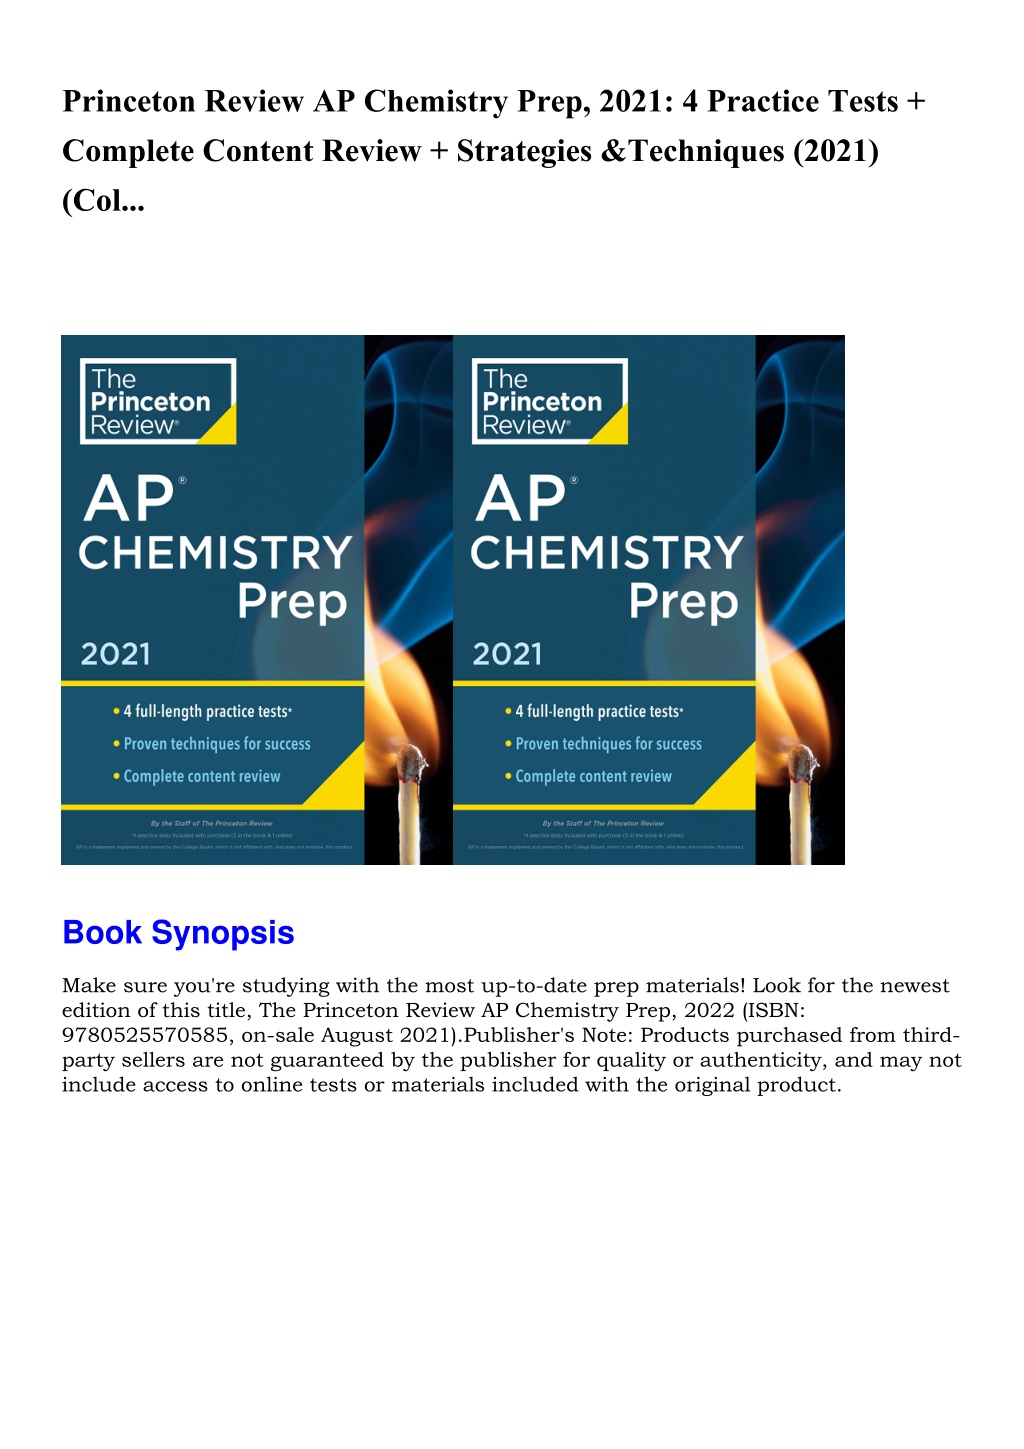 PPT EPUB Princeton Review AP Chemistry Prep 2021 4 Practice Tests